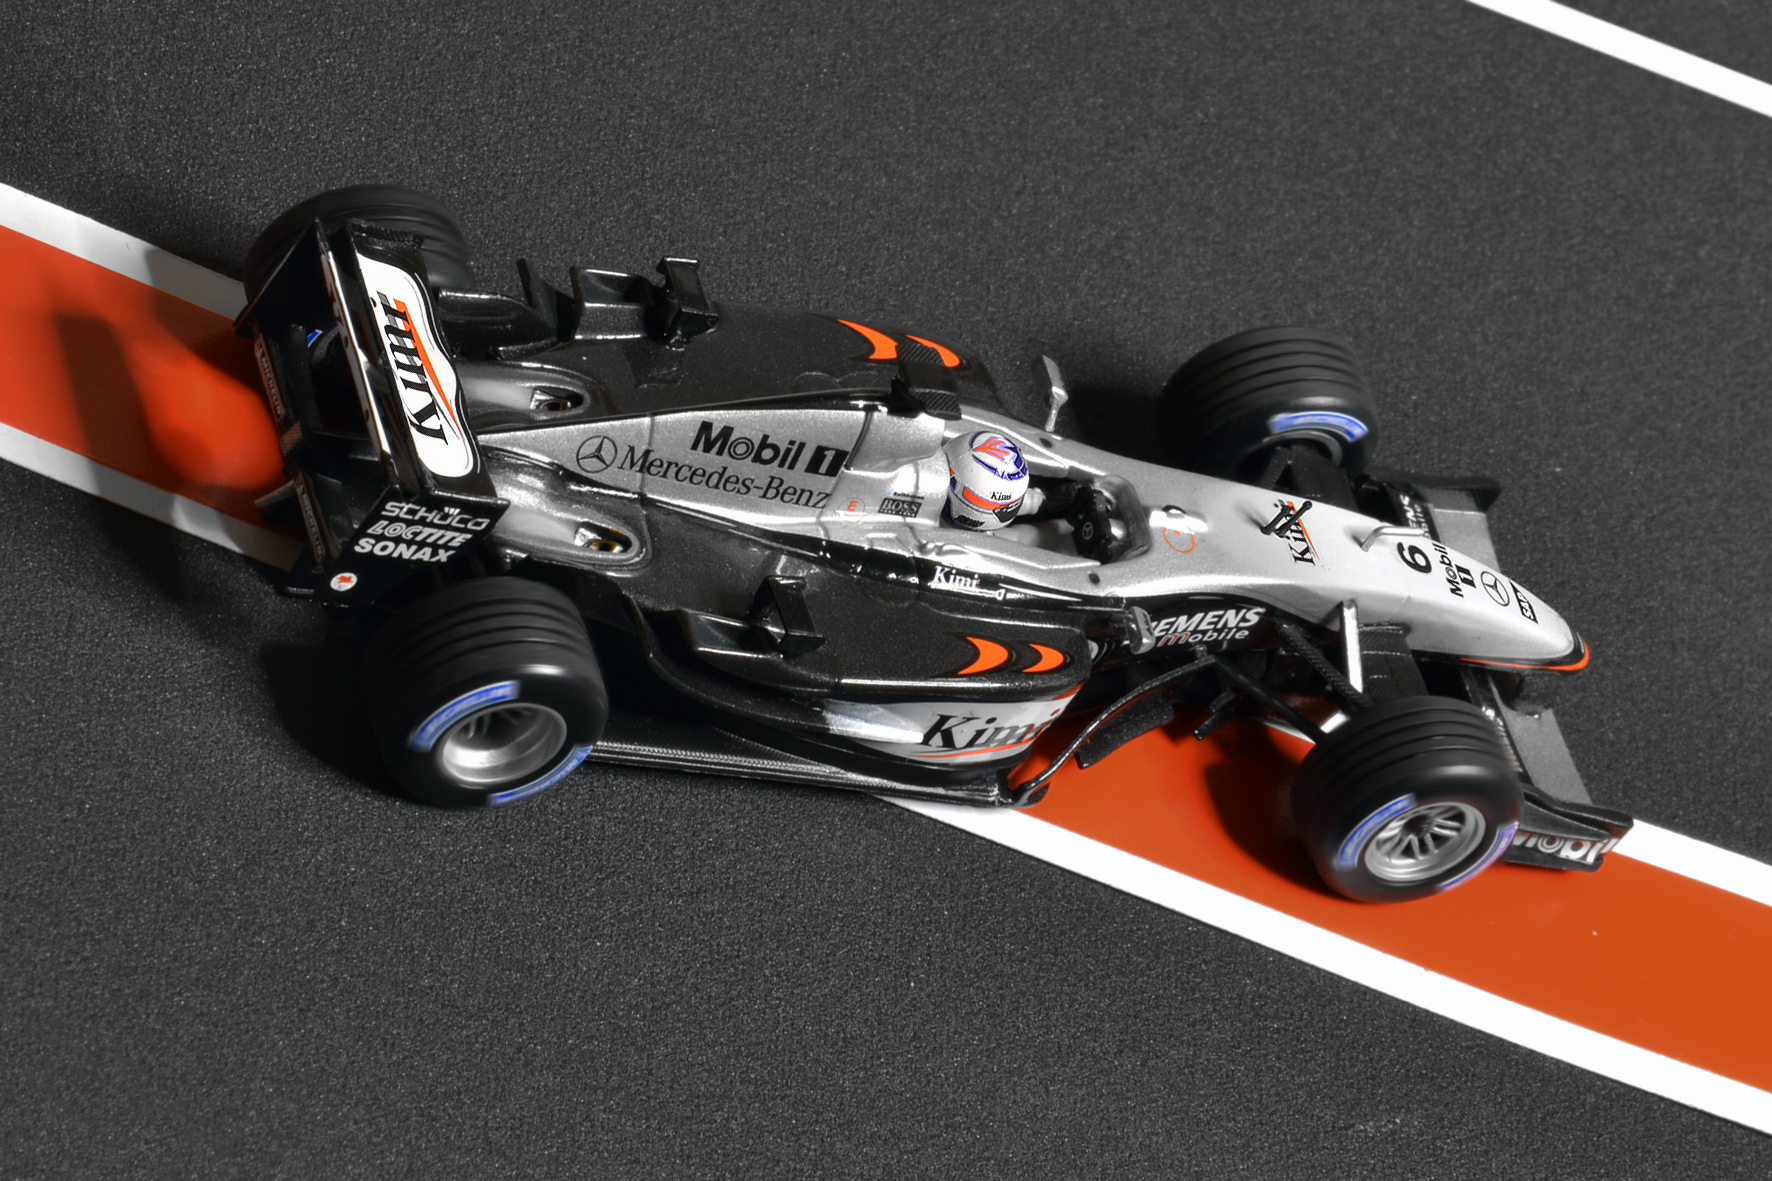 McLaren MP4-17D Kimi Räikkönen 2003 - Minichamps 1:43